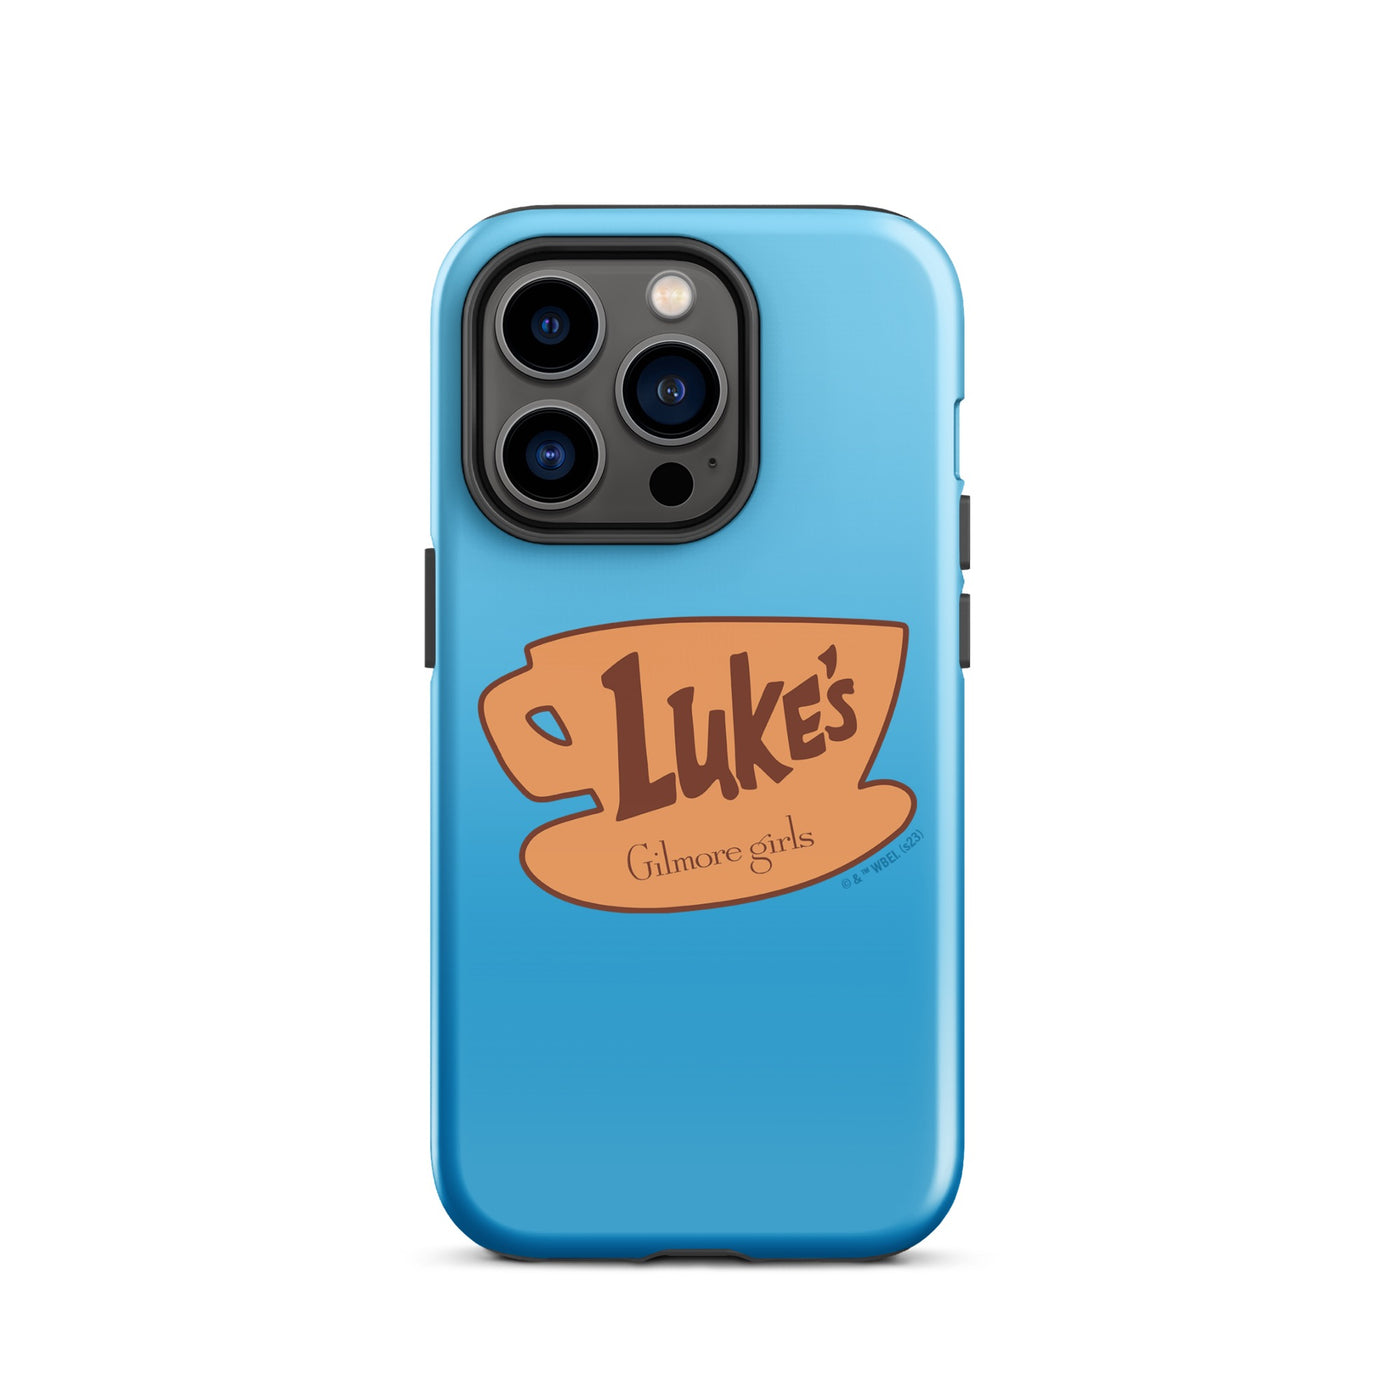 Gilmore Girls Luke's Diner Tough Phone Case - iPhone